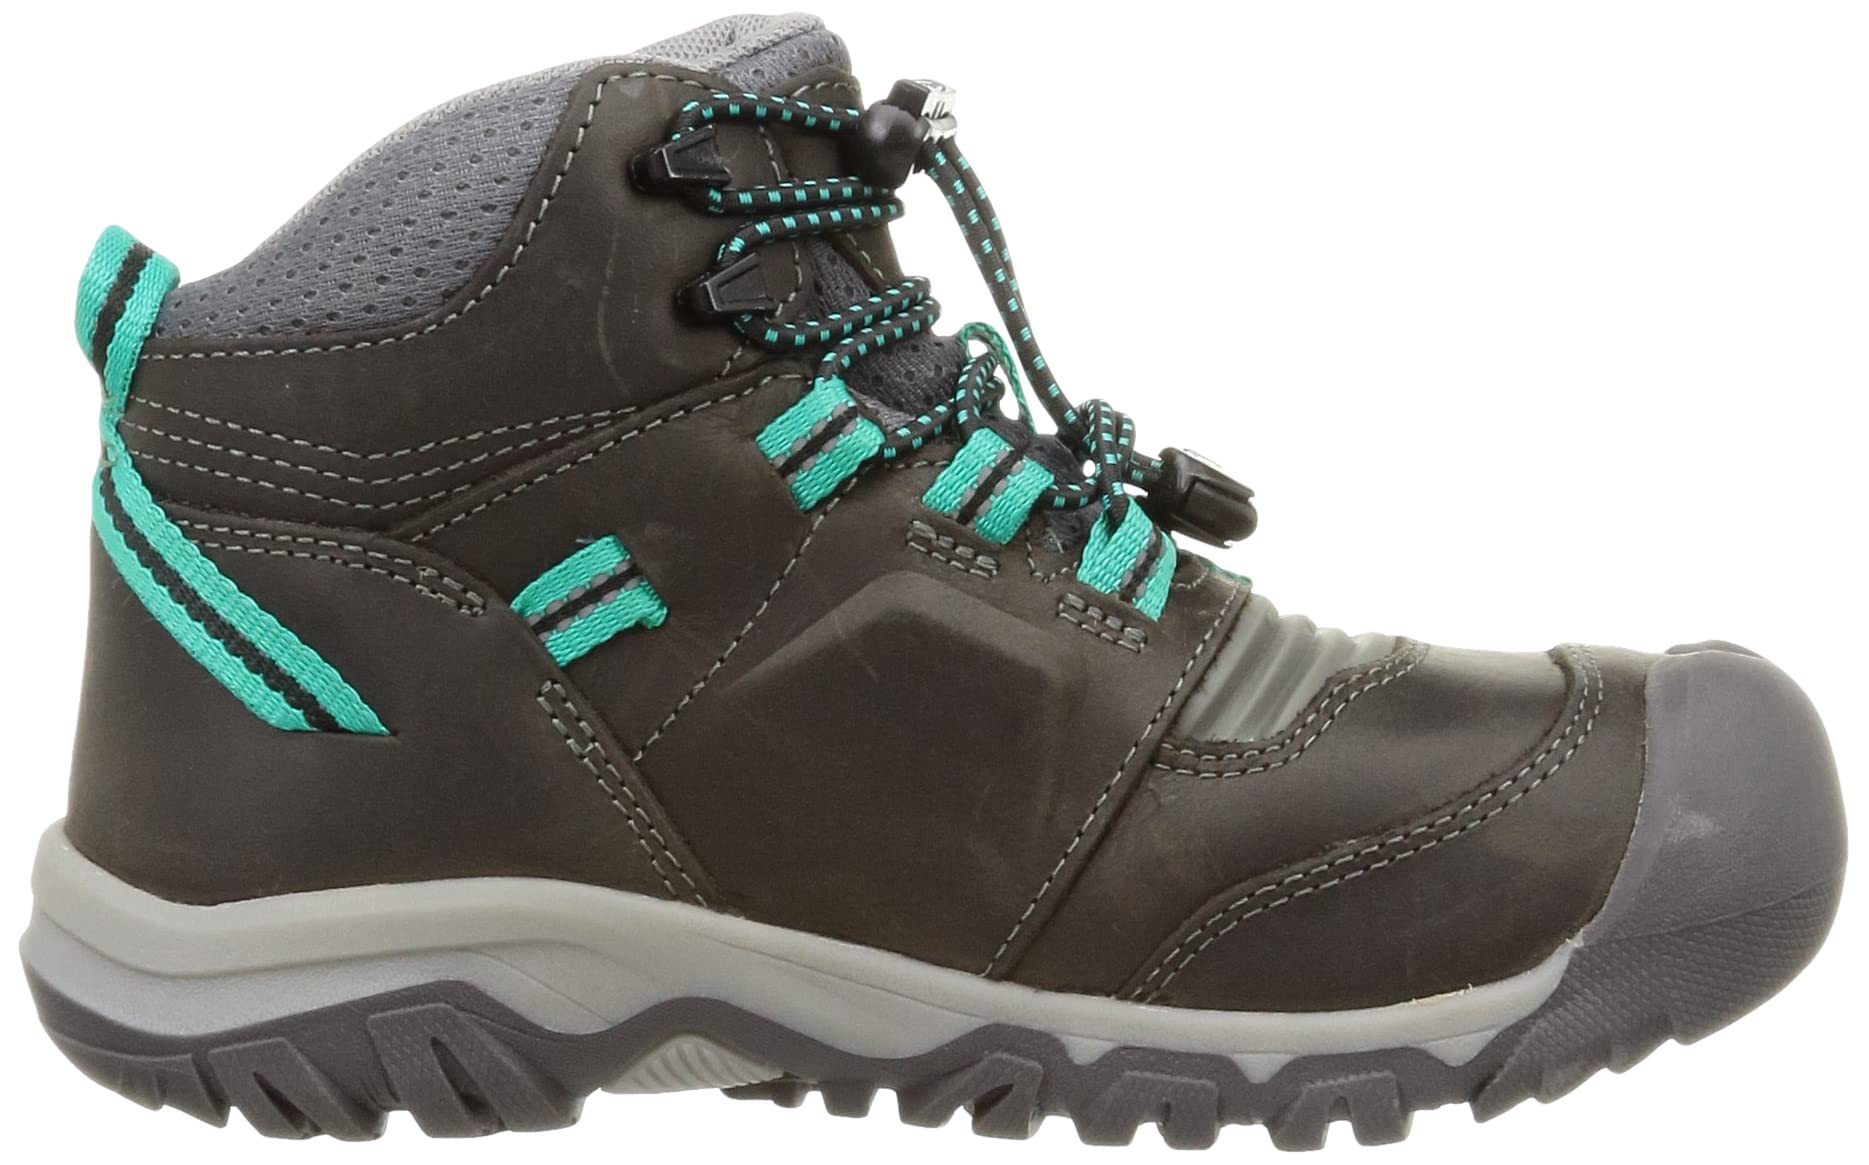 KEEN Unisex-Child Ridge Flex Mid Height Waterproof Leather Hiking Boots